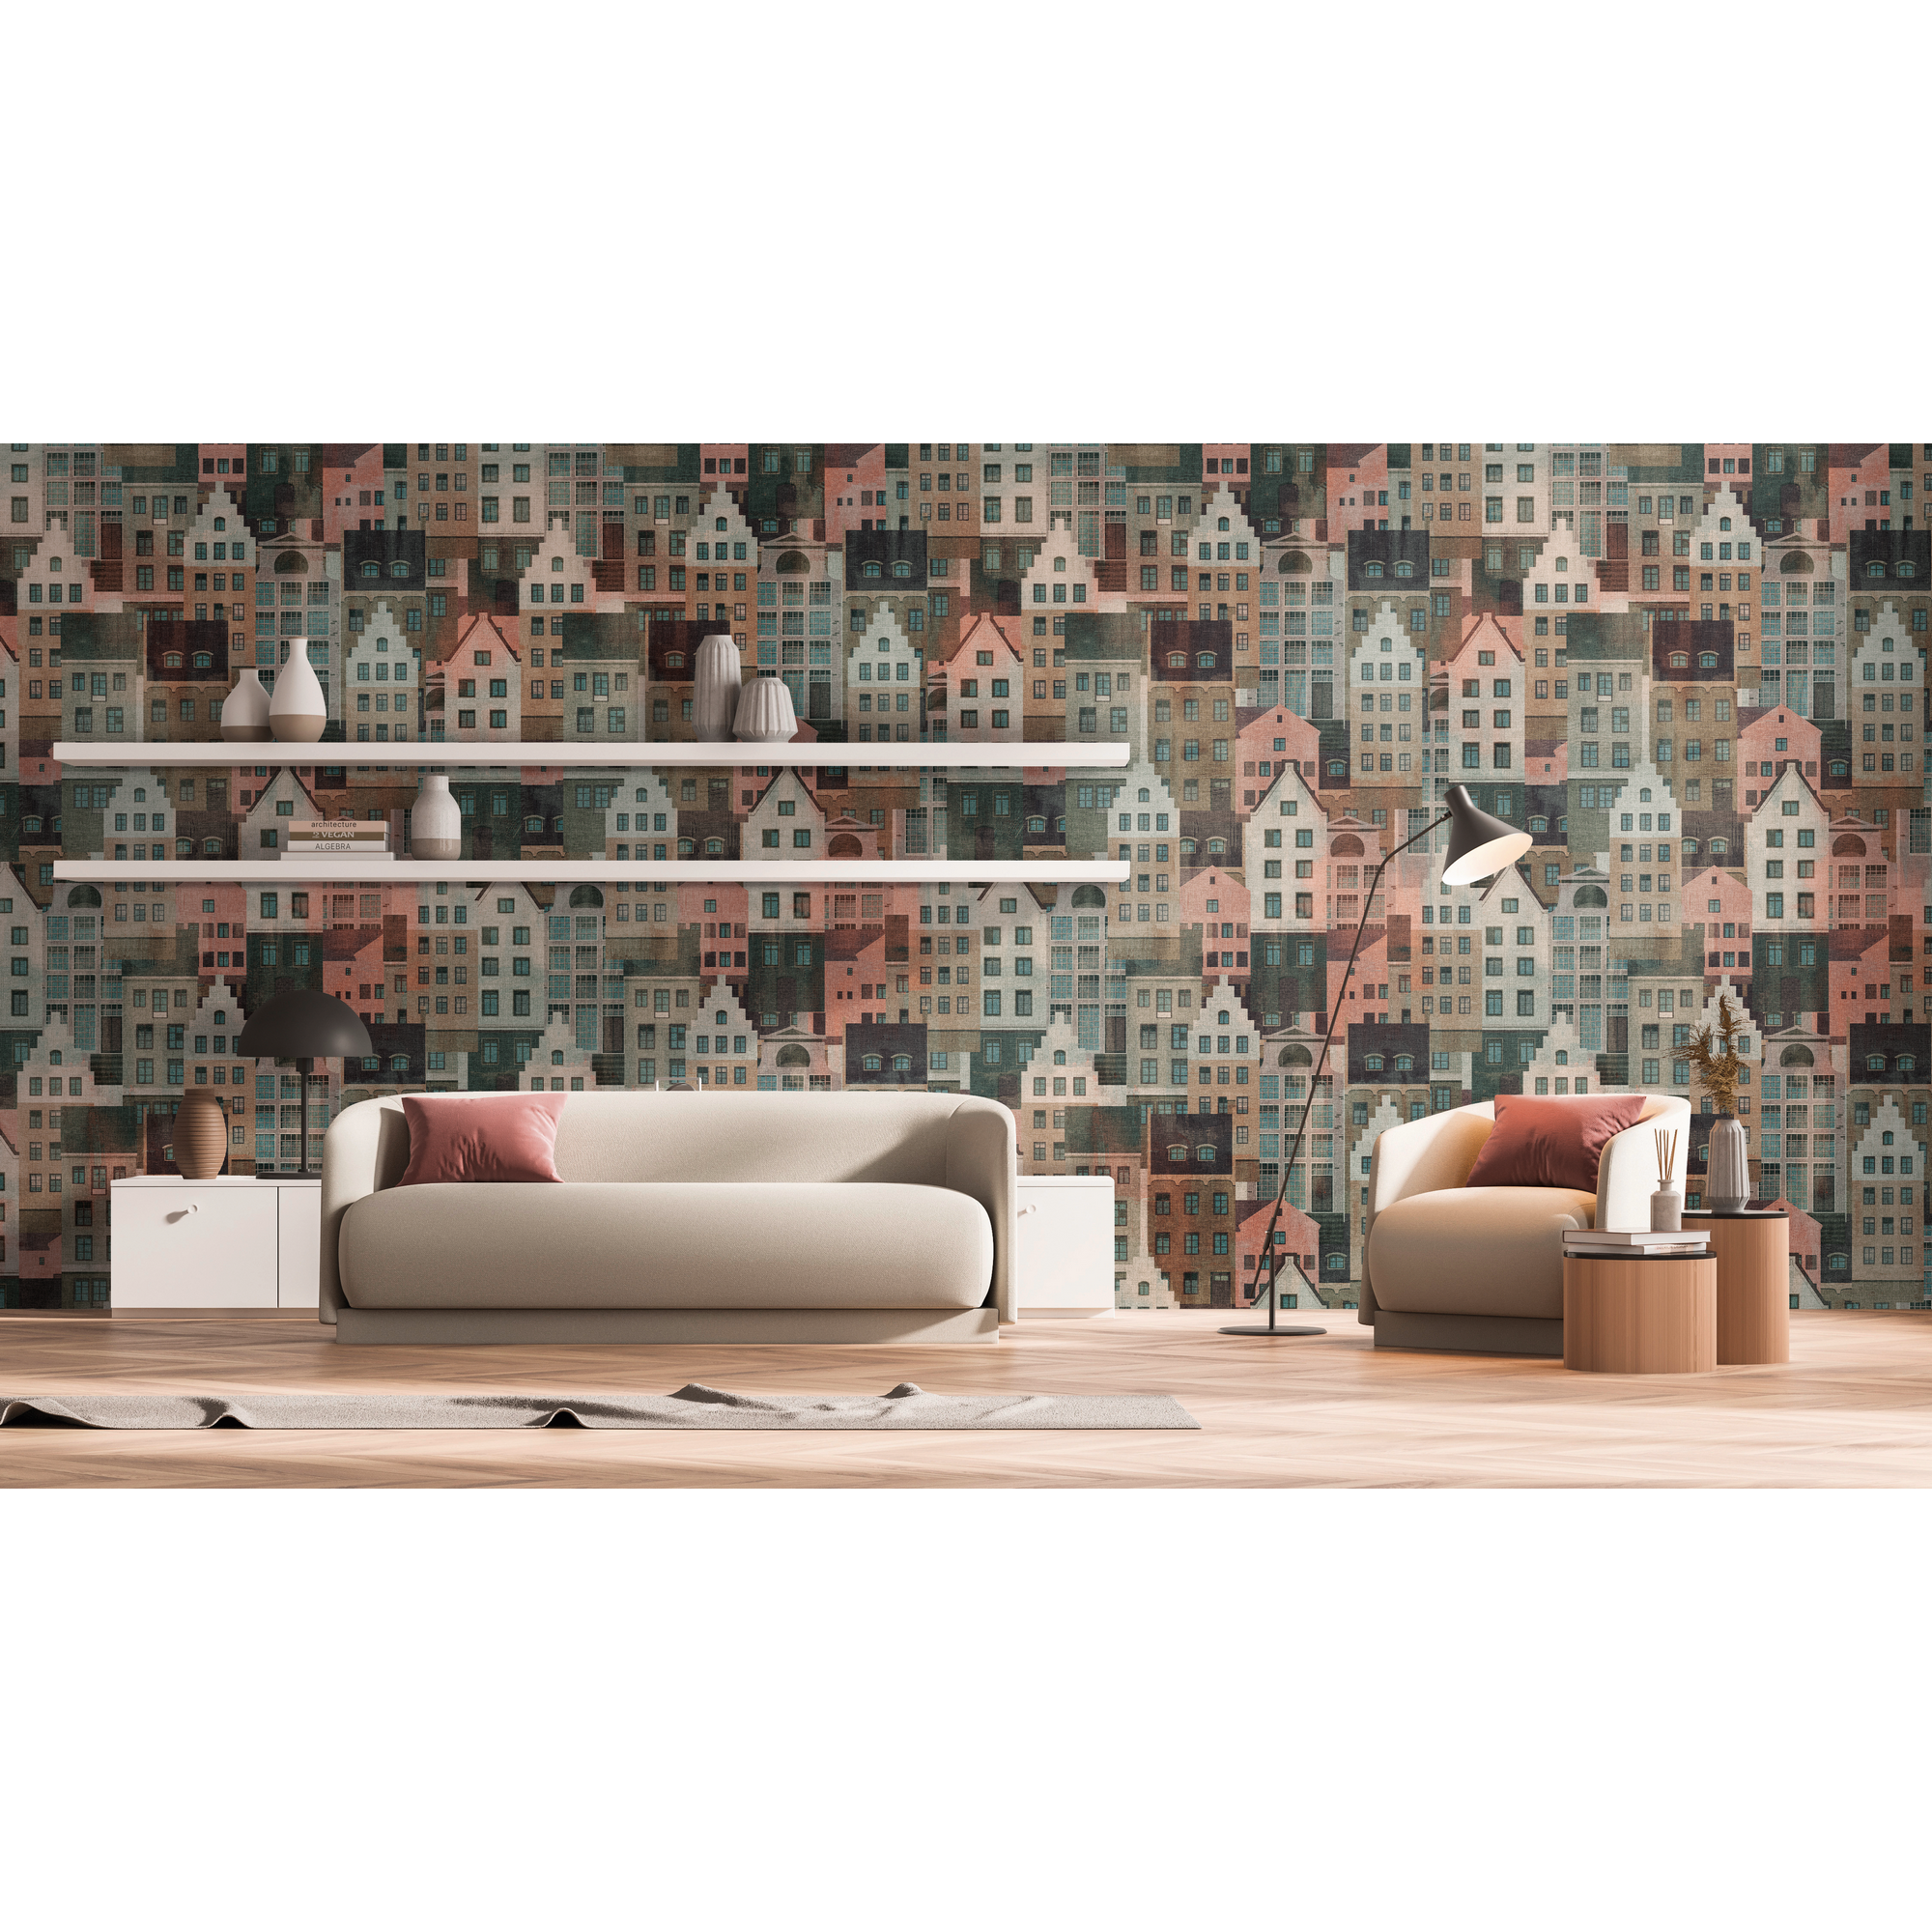 Vliestapete 'The Wall II' Häuser grau 3-teilig 159 x 280 cm + product picture